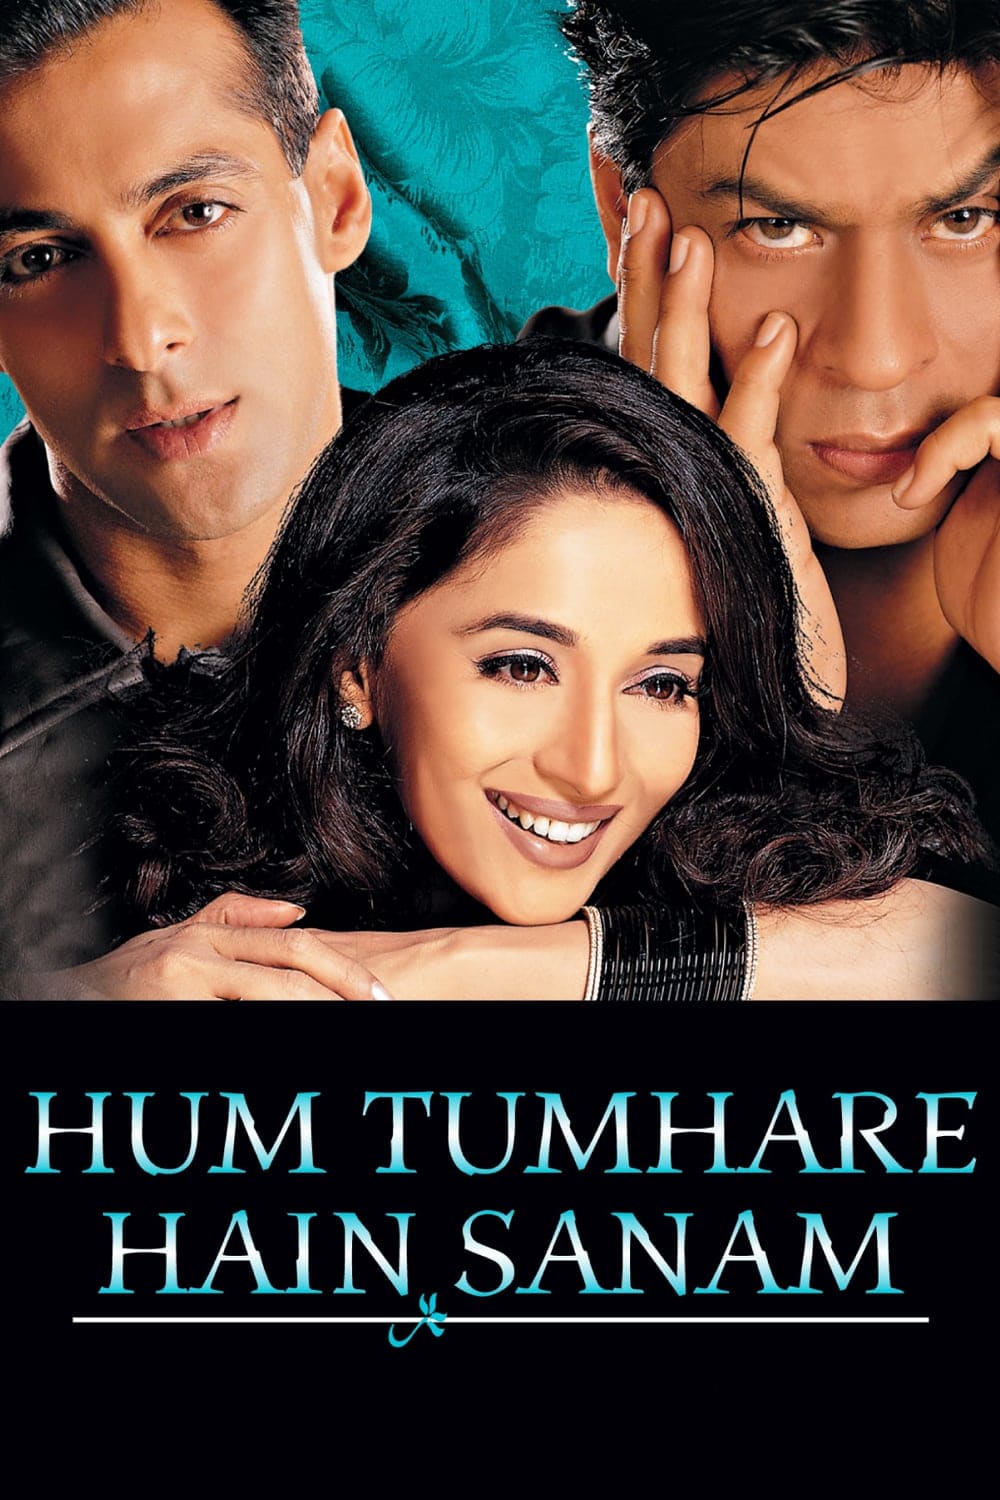 Poster for the movie "Hum Tumhare Hain Sanam"